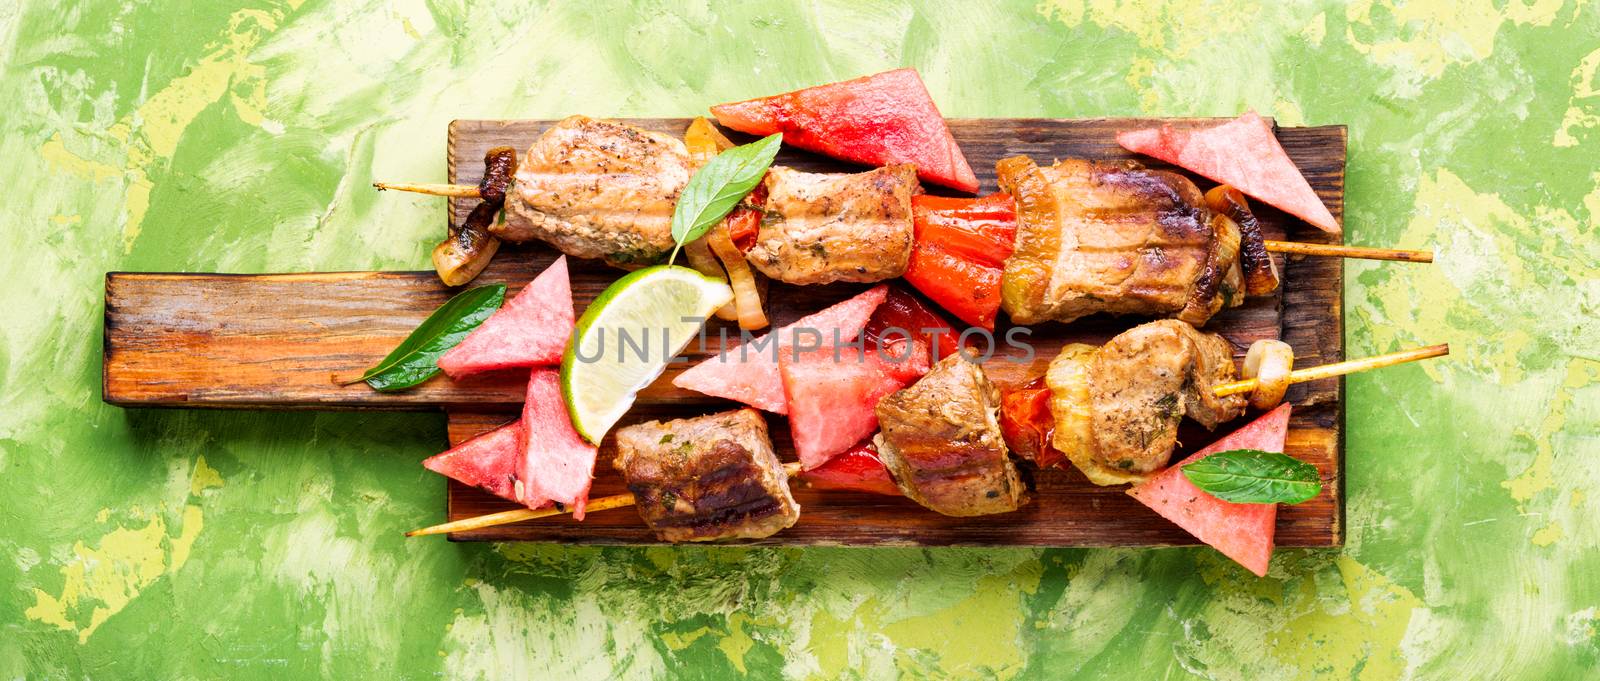 Shish kebab with watermelon garnish by LMykola